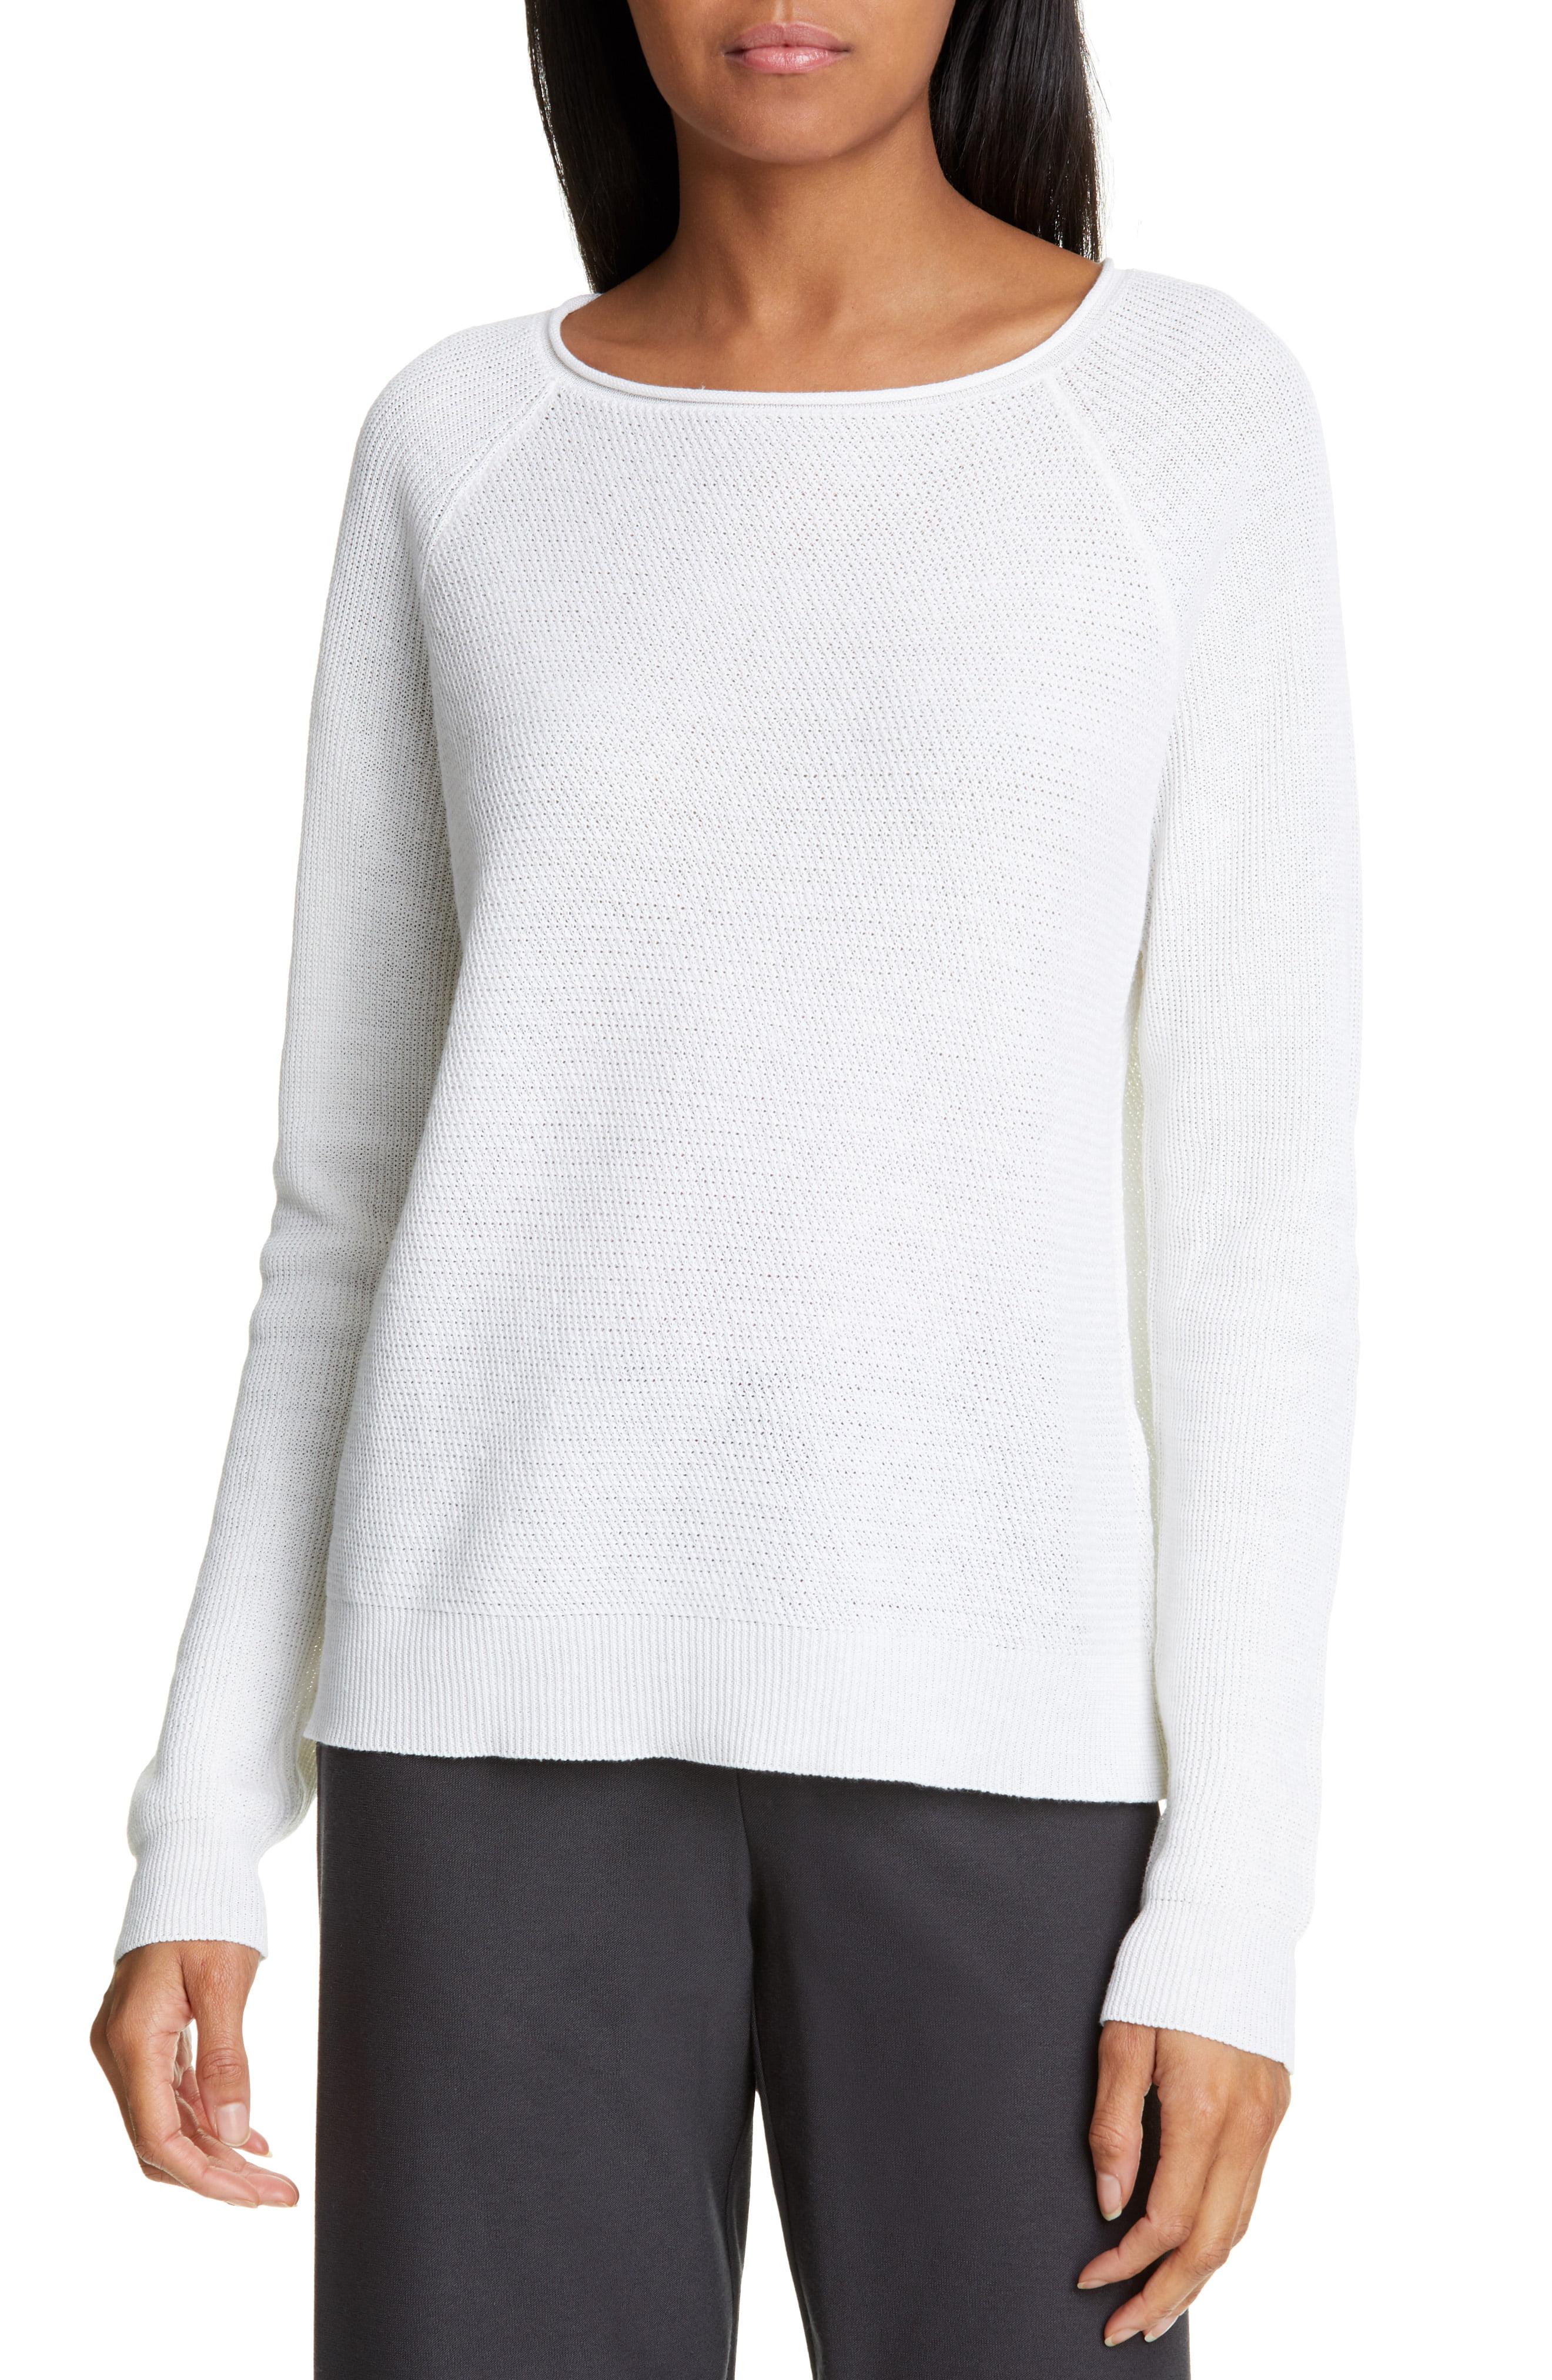 Lyst - Eileen Fisher Organic Linen & Cotton Sweater in White